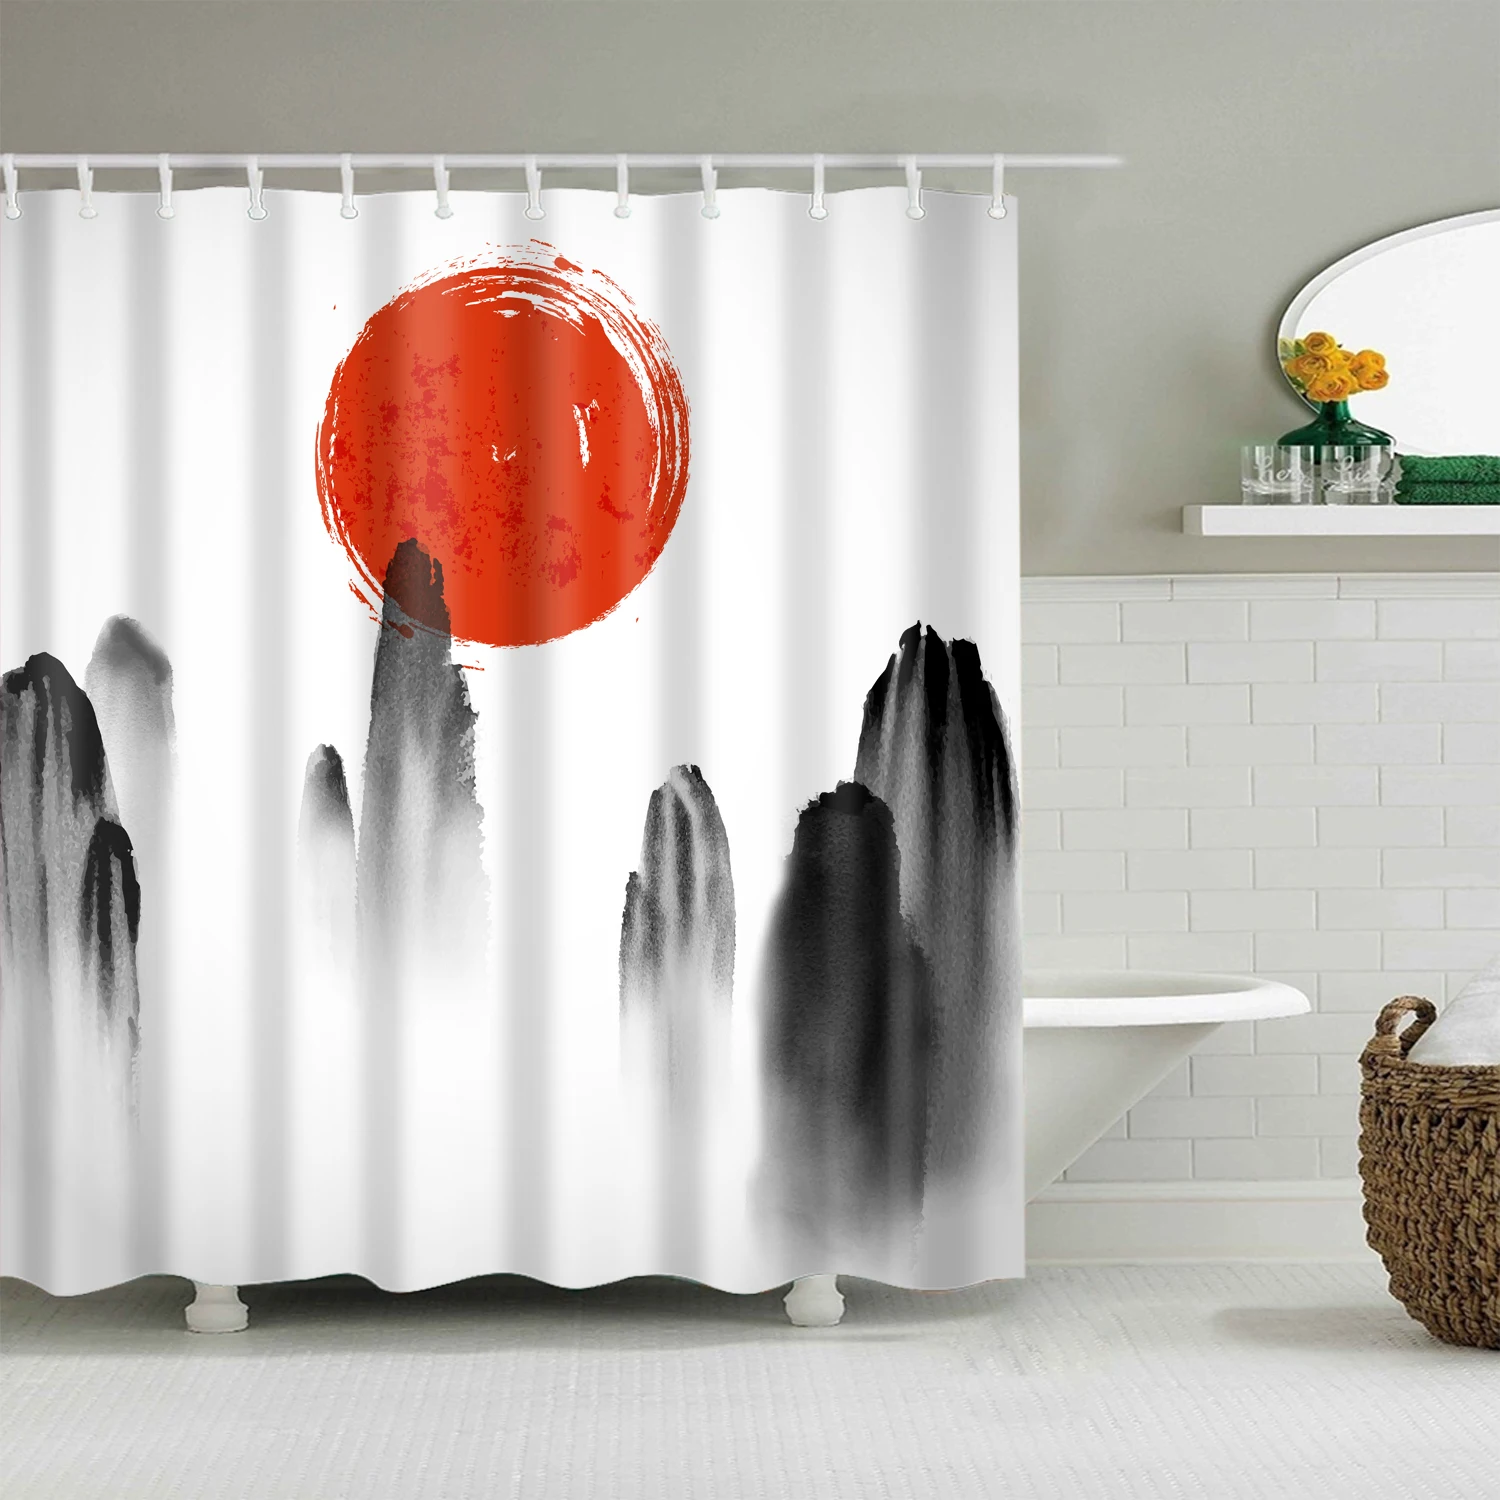 

Mountain 3D Green bath curtain long 180x200cm Waterproof polyester Blackout Shower curtain For bathroom curtain cortinas bano